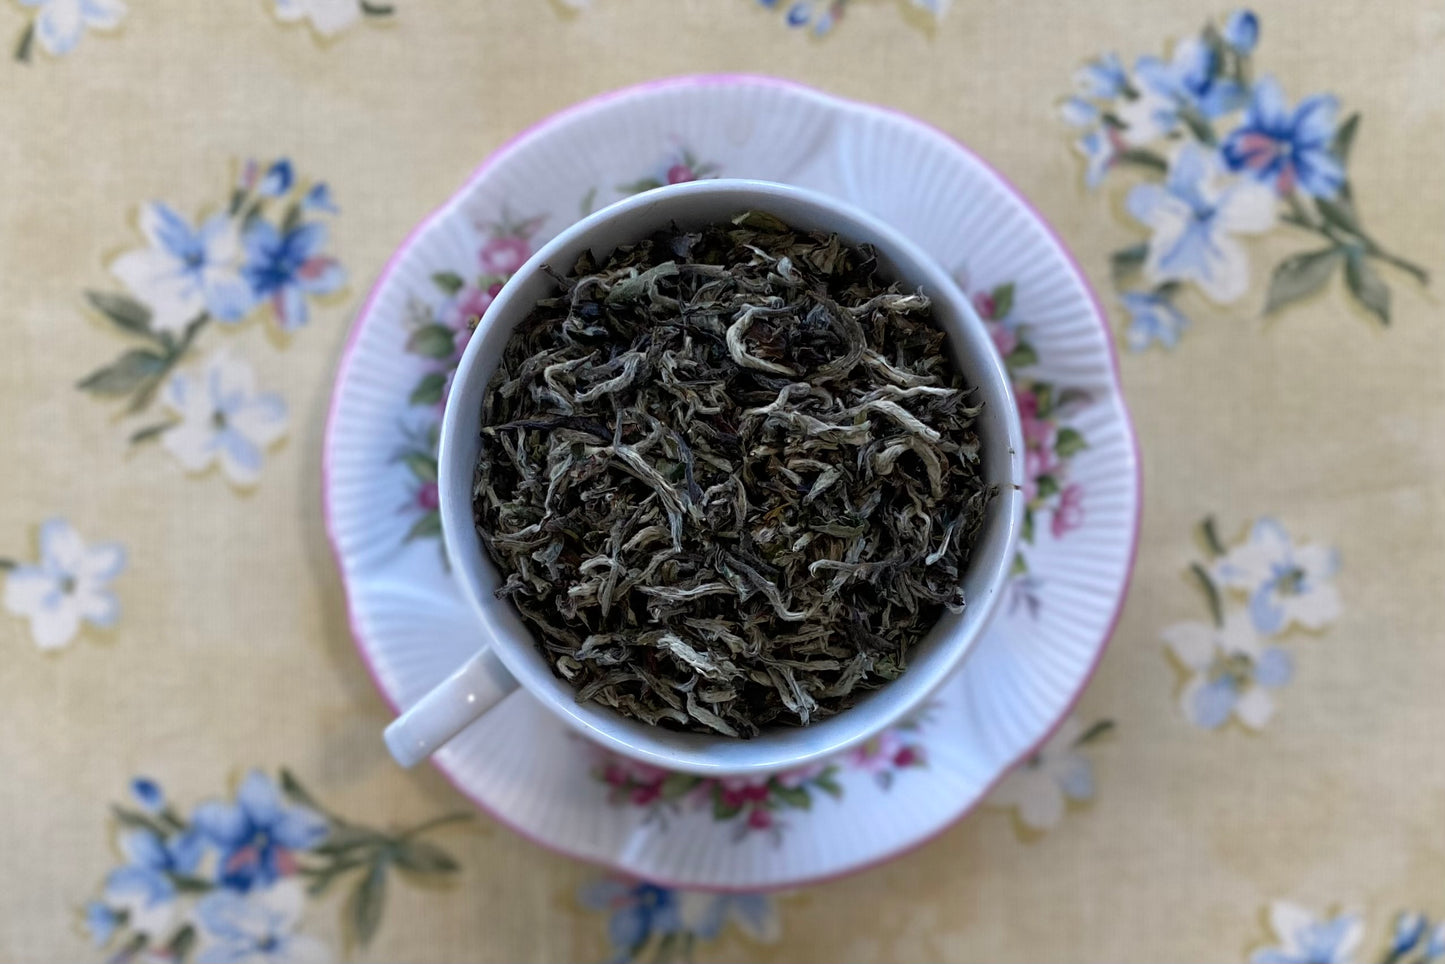 Teacup full of silvery white tea leaves